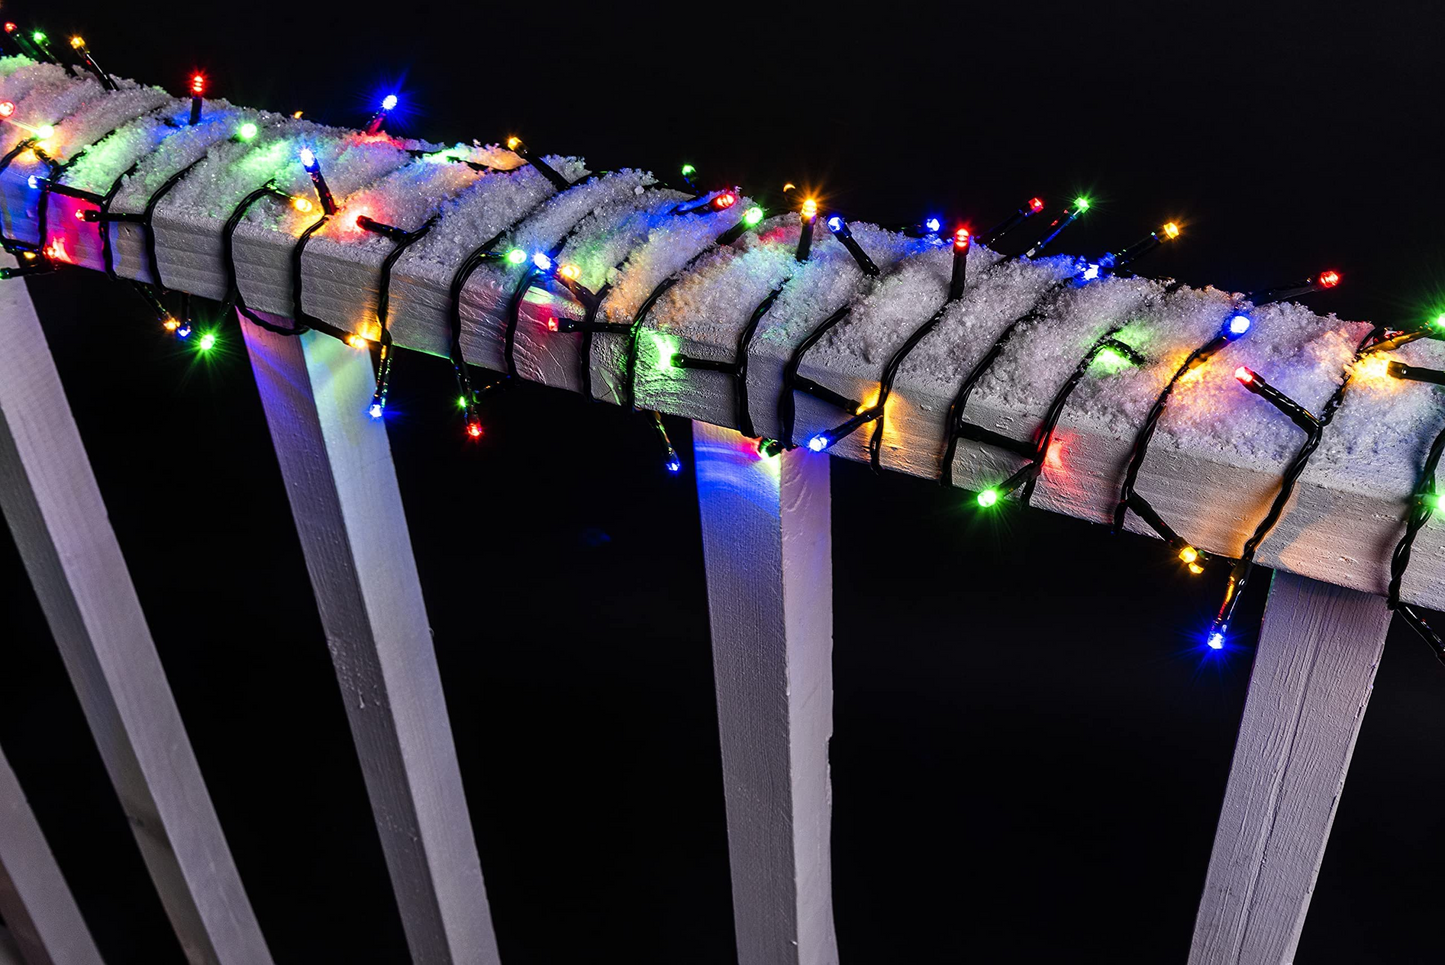 600 LED Christmas String Lights Multicolor